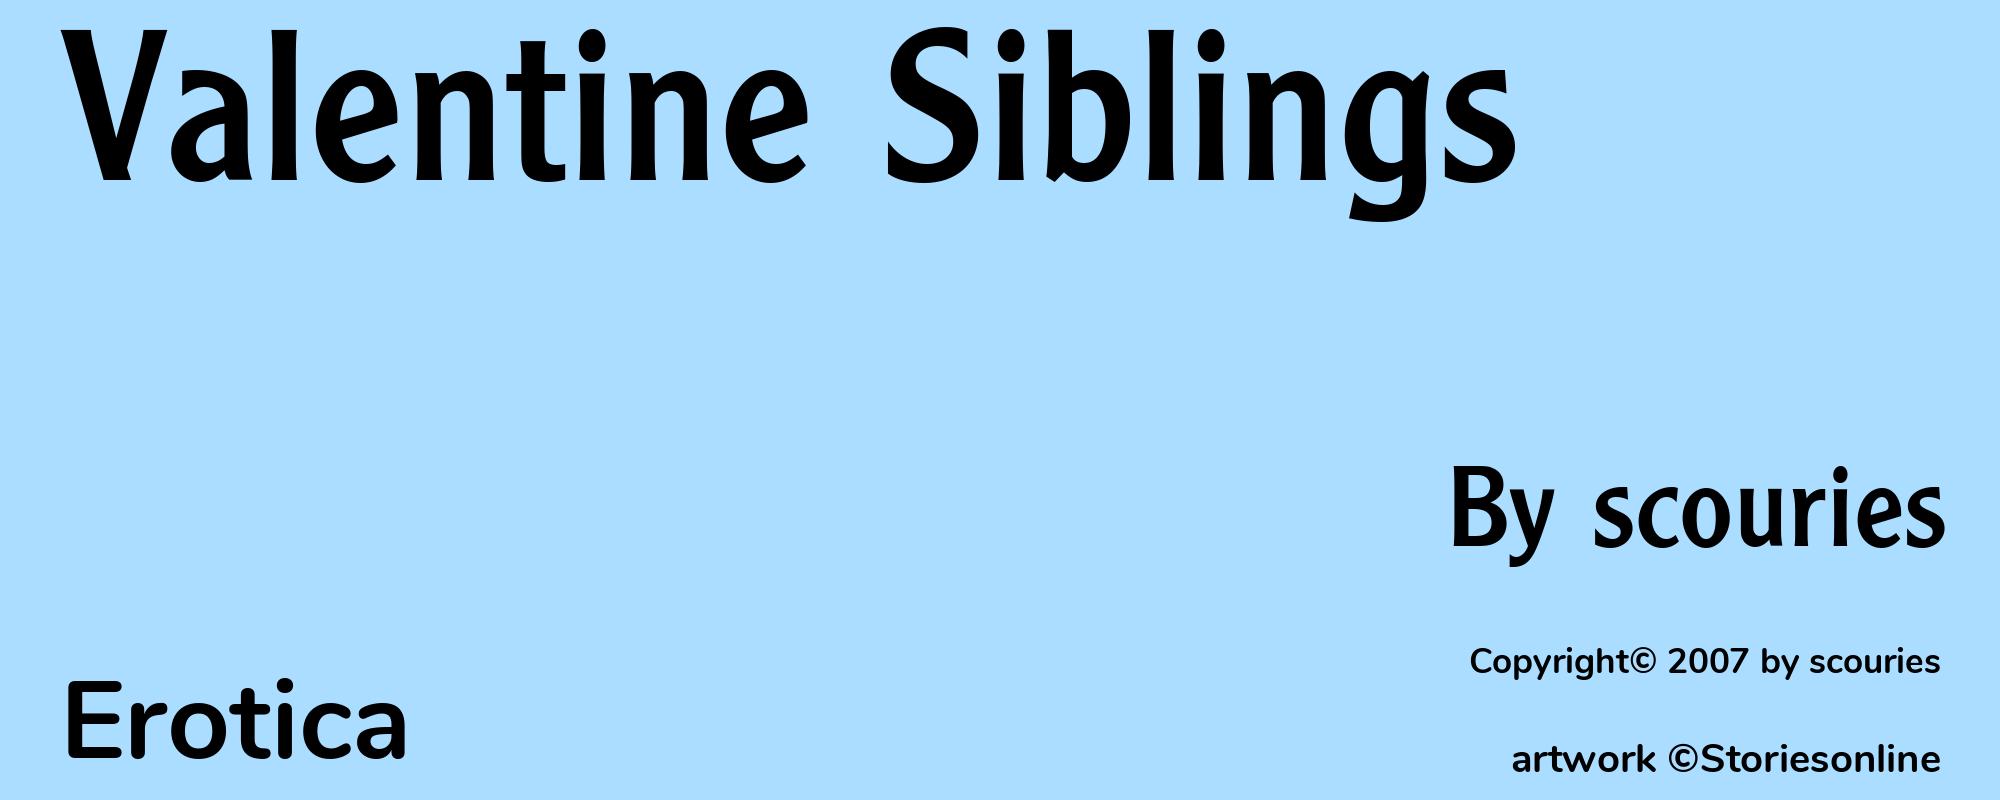 Valentine Siblings - Cover